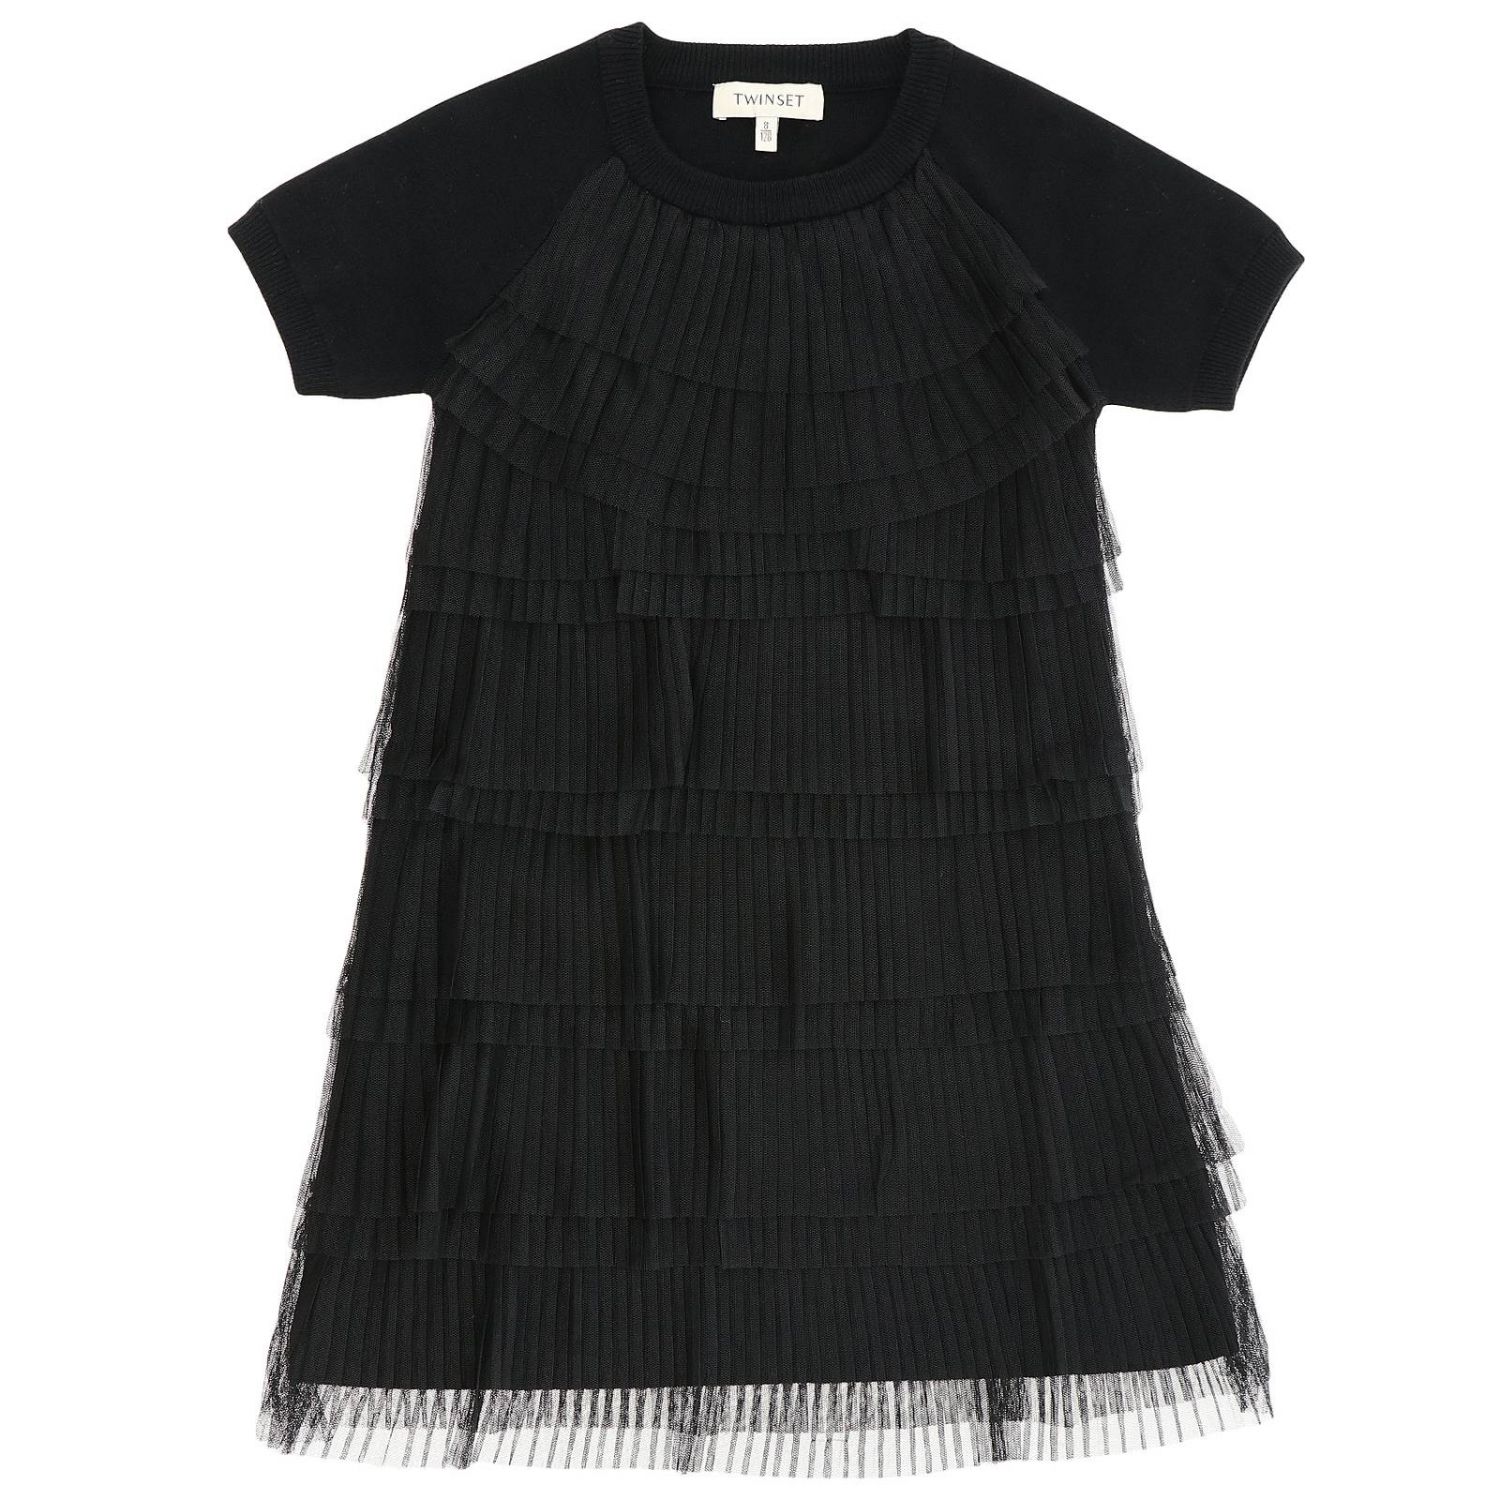 Twinset Outlet: dress for girls - Black | Twinset dress GJ3110 online ...